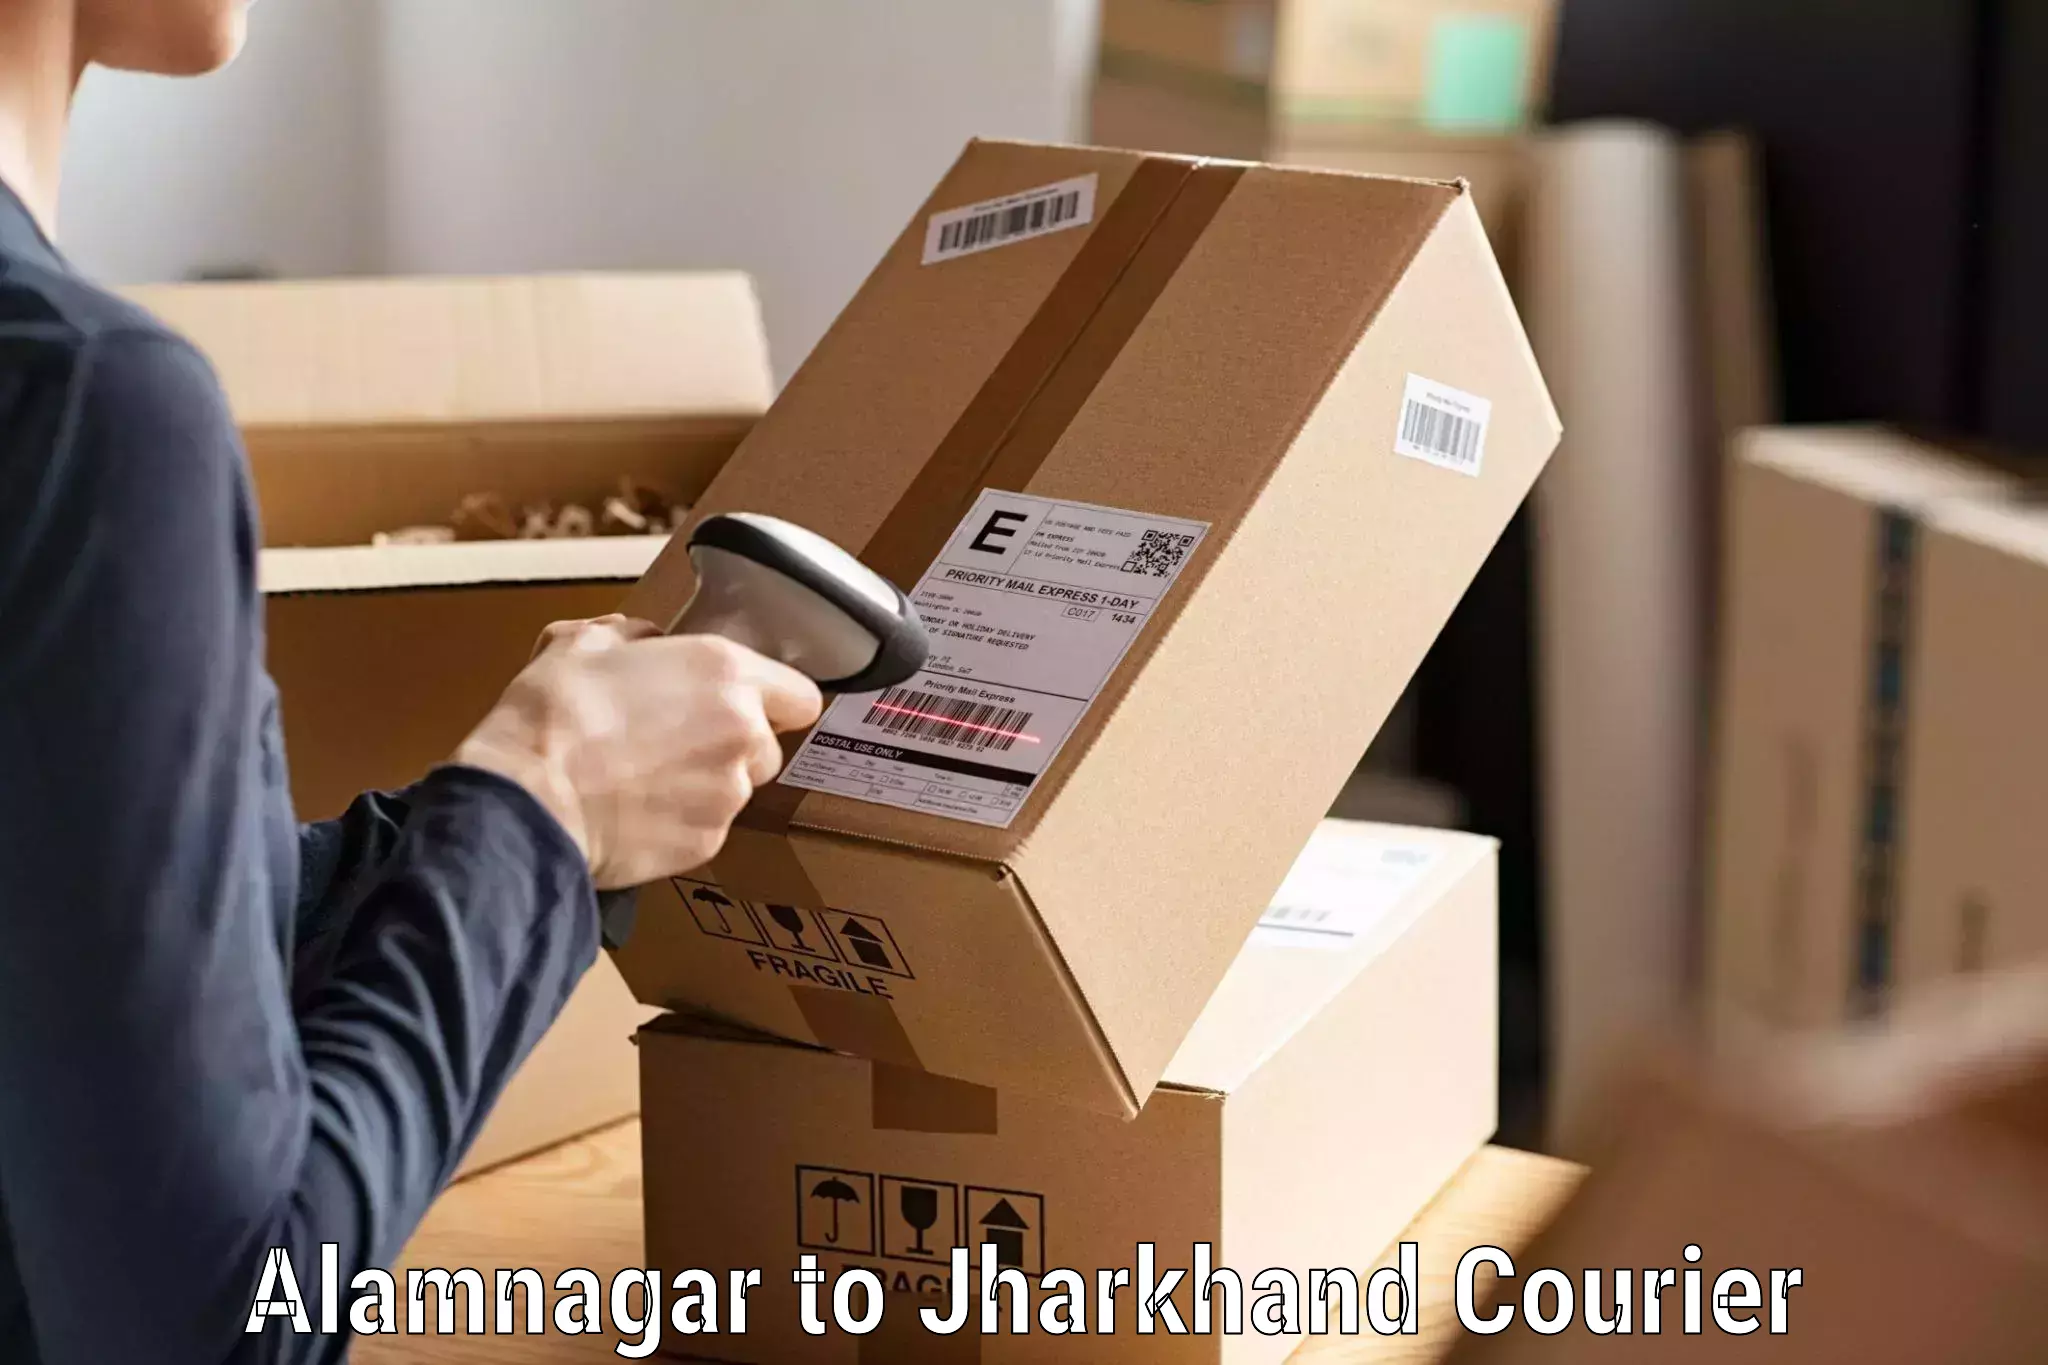 Corporate courier solutions Alamnagar to Bokaro